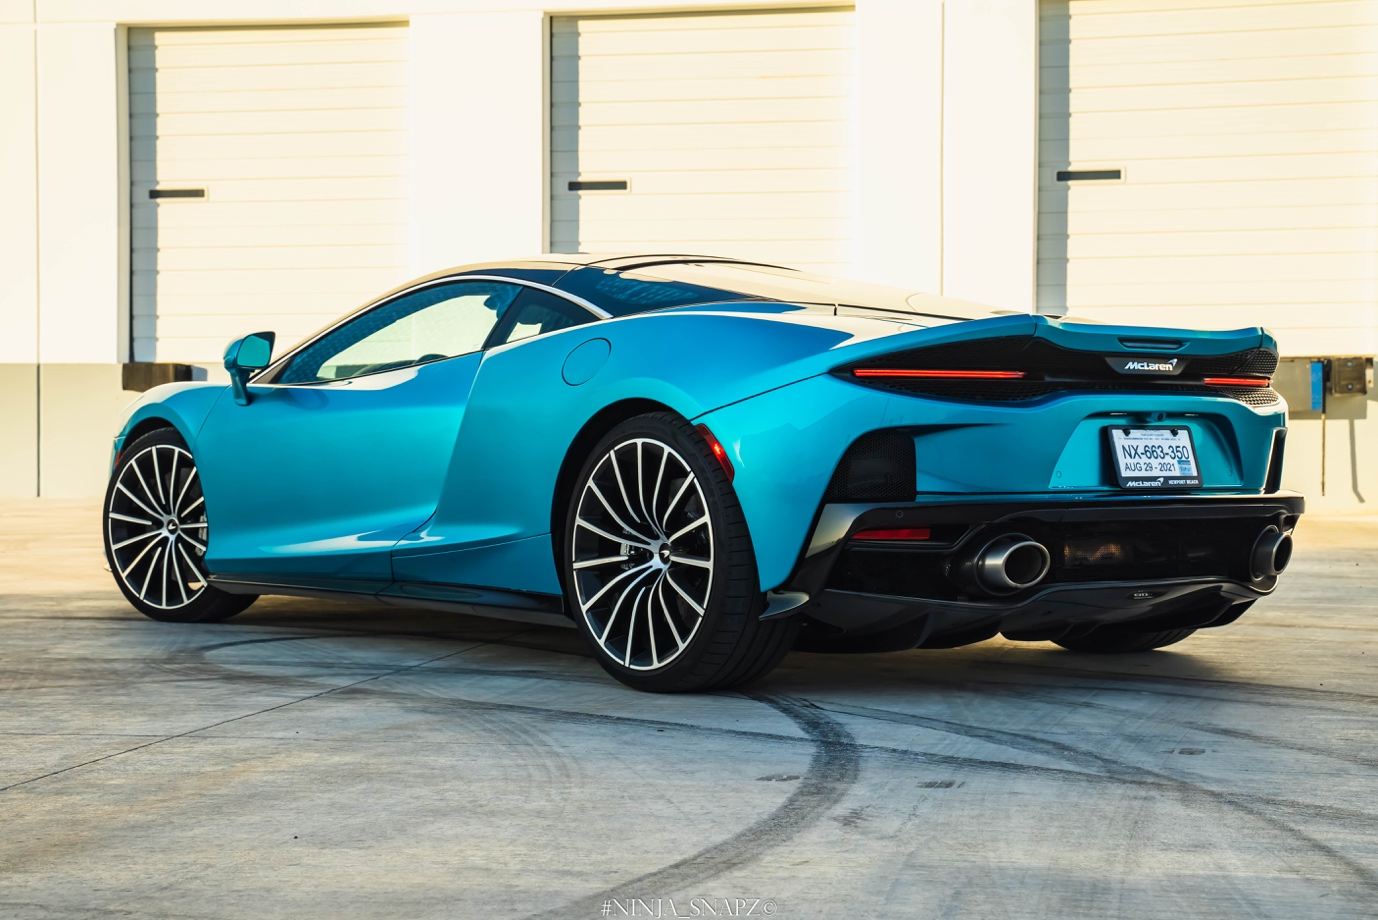 Rear view of a blue Lamborghini